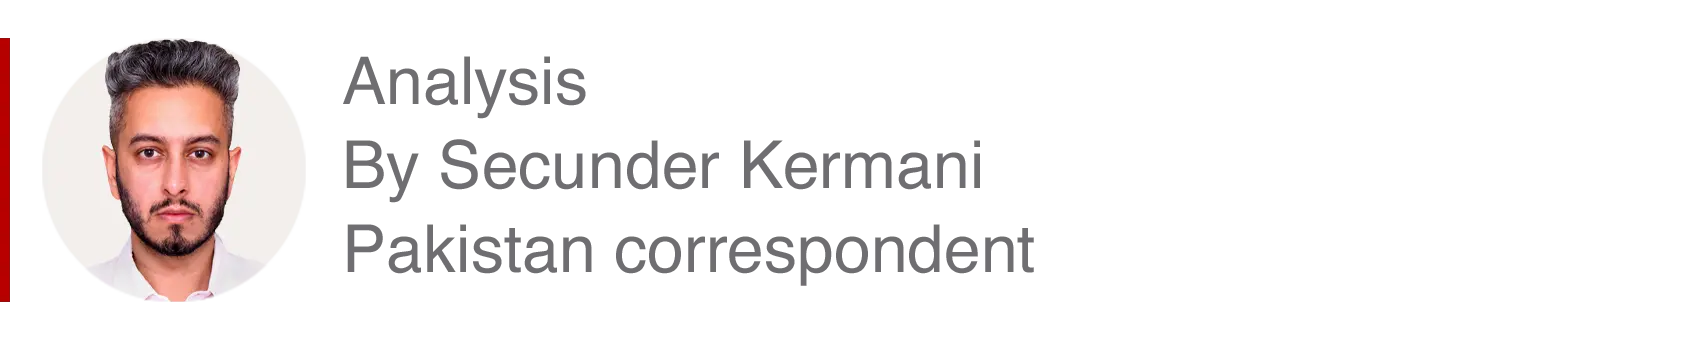 Analysis box by Secunder Kermani, Pakistan correspondent